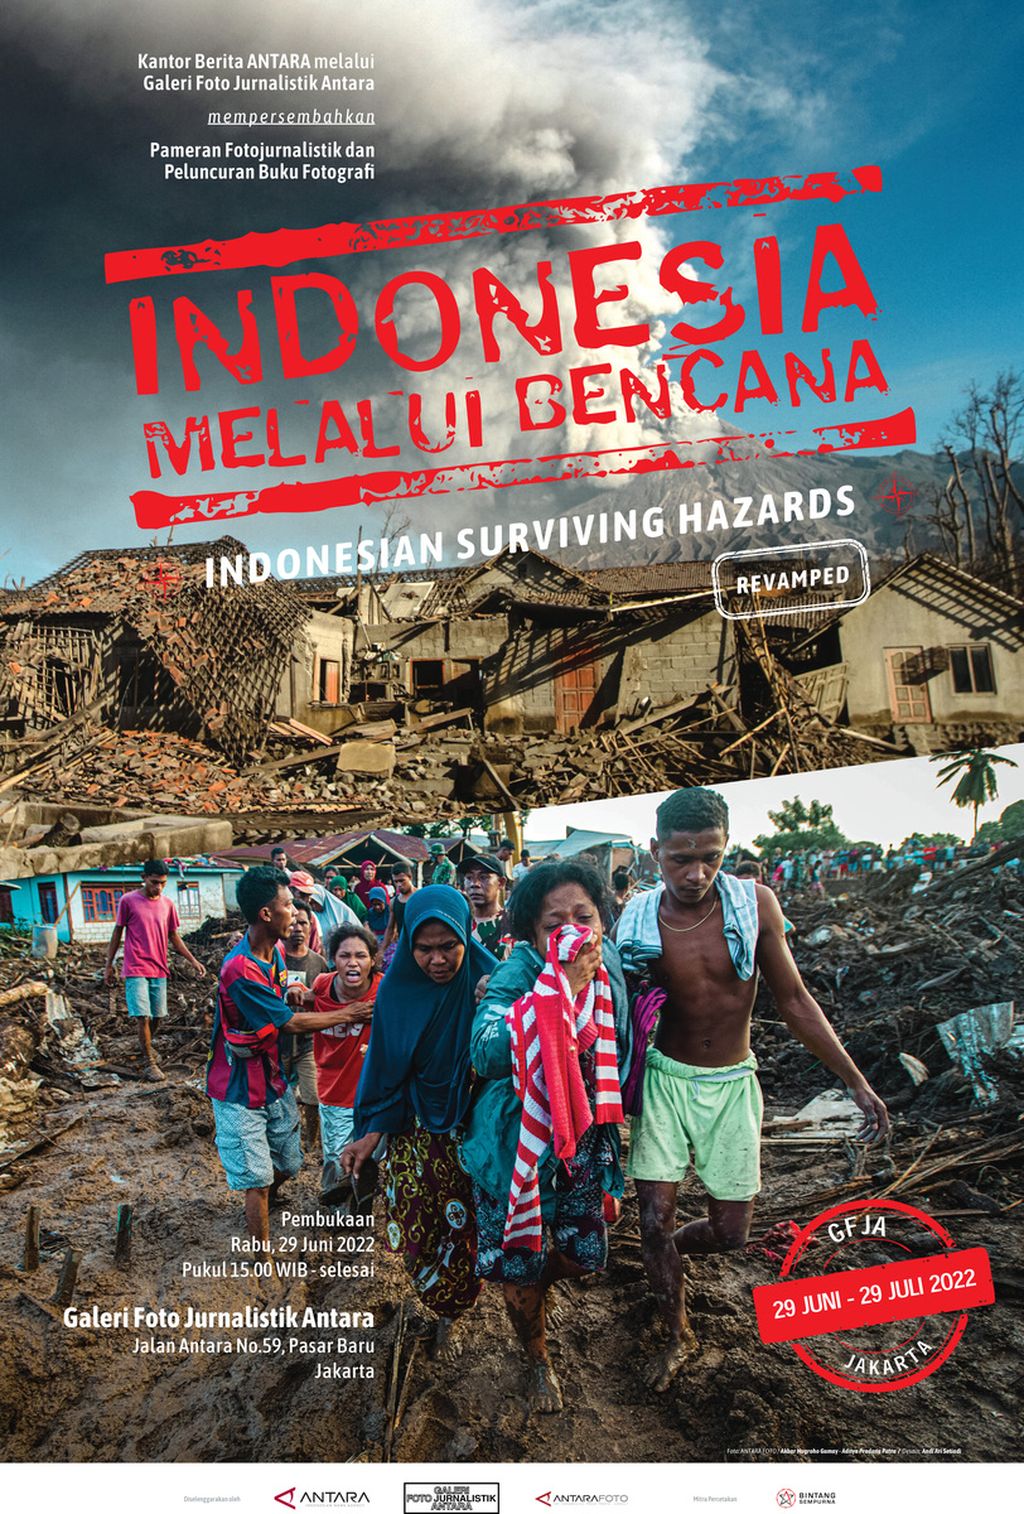 Poster pameran foto jurnalistik Indonesia Melalui Bencana yang digelar di Galeri Foto Jurnalistik Antara (GFJA), Pasar Baru, Jakarta, 29 Juni-29 Juli 2022.